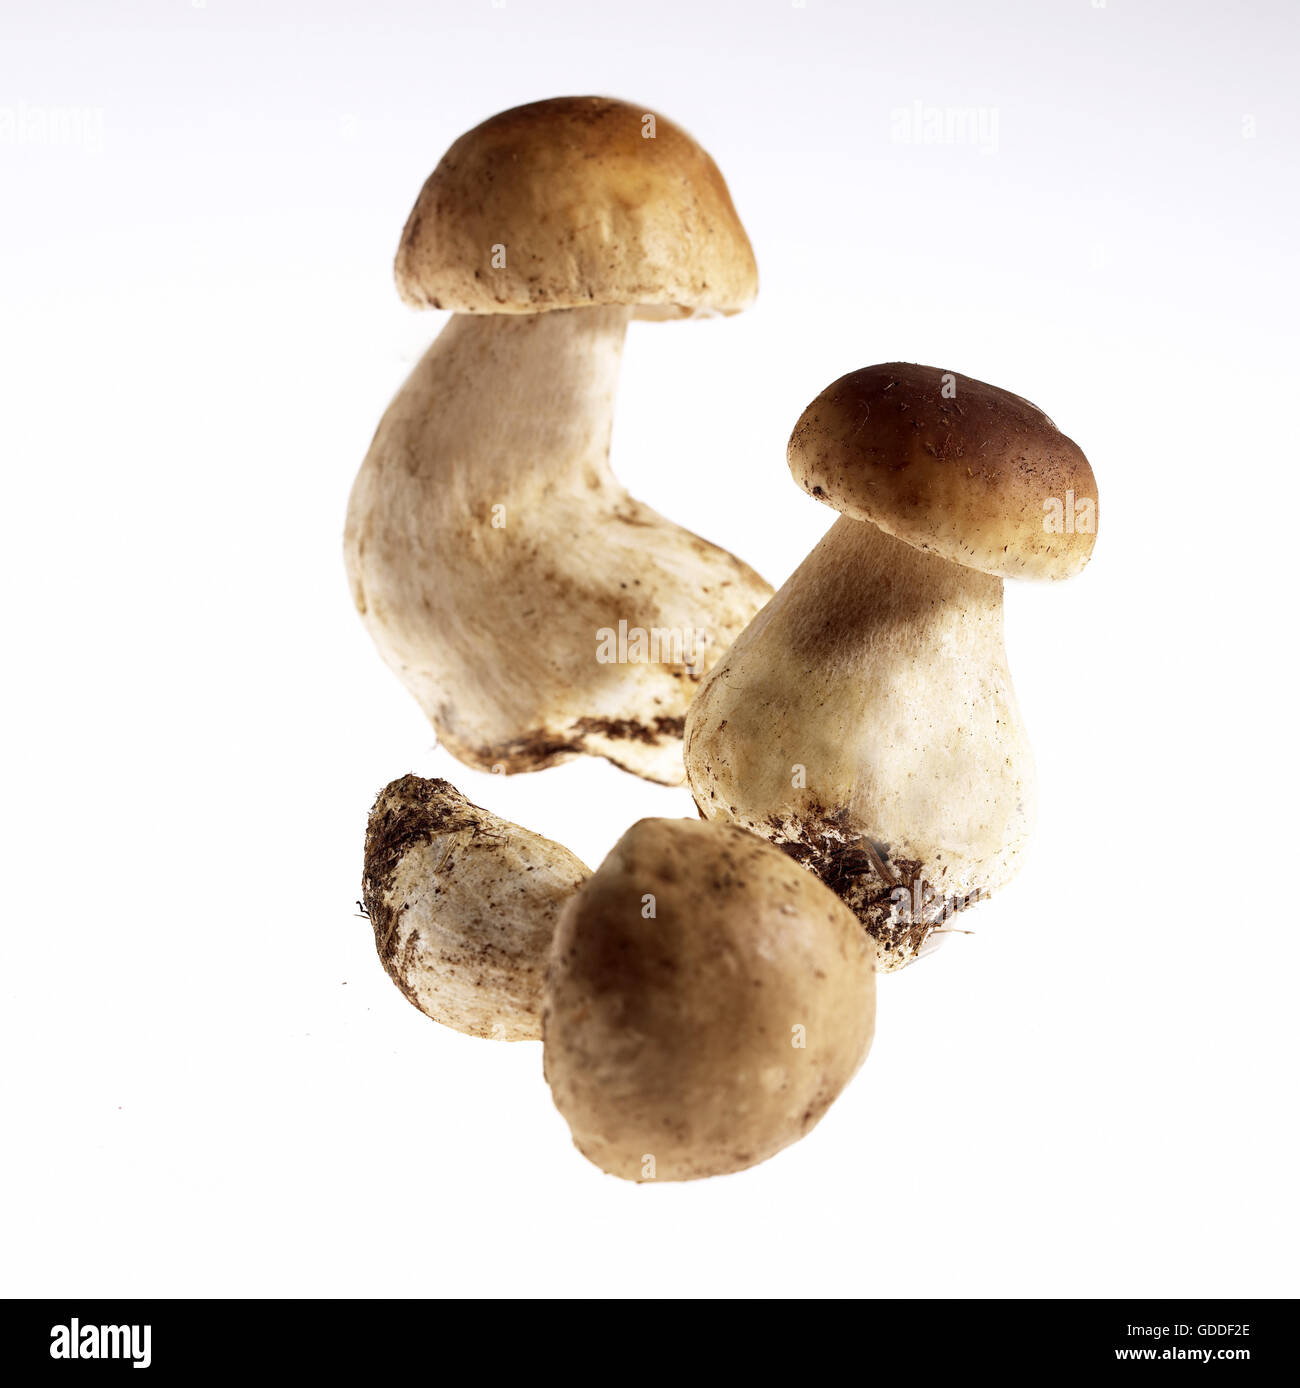 Cep or Penny Bun or King Bolete, boletus edulis, Mushrooms against White Background Stock Photo